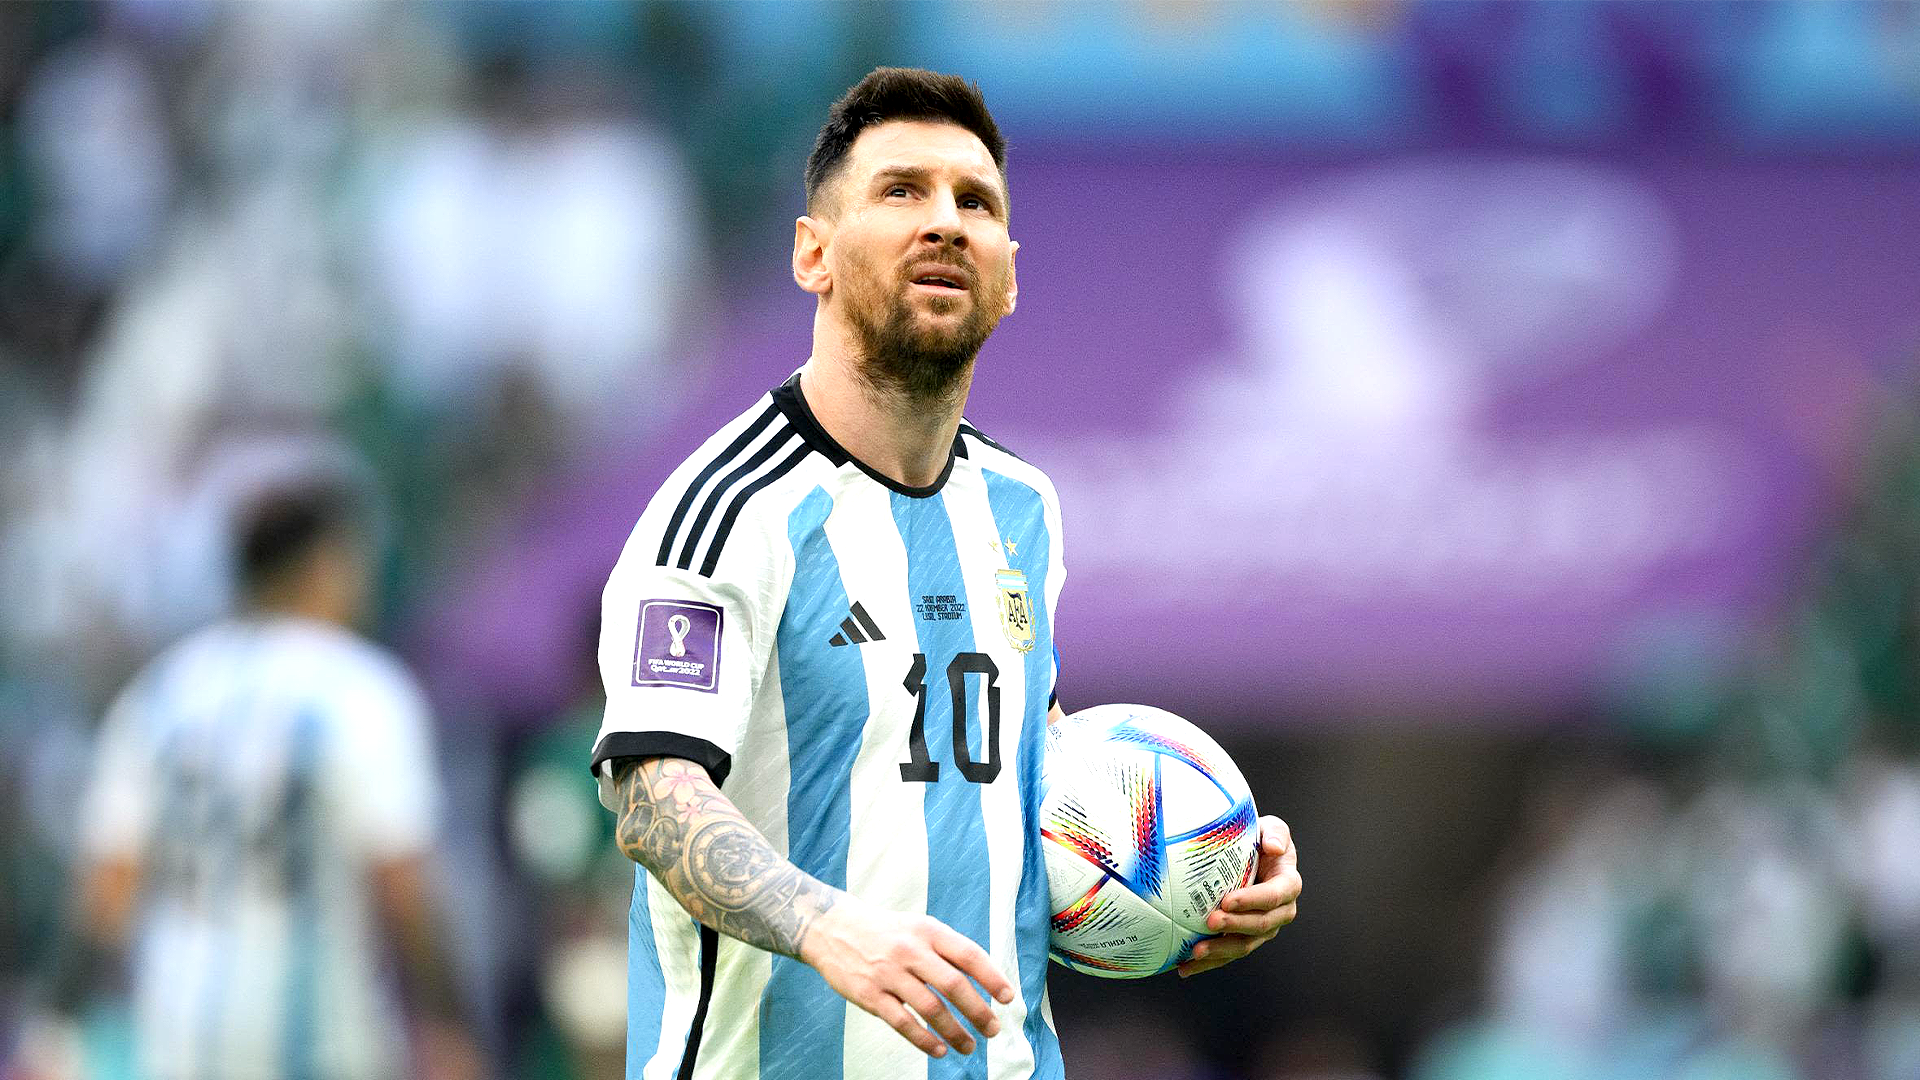 Messi retirement